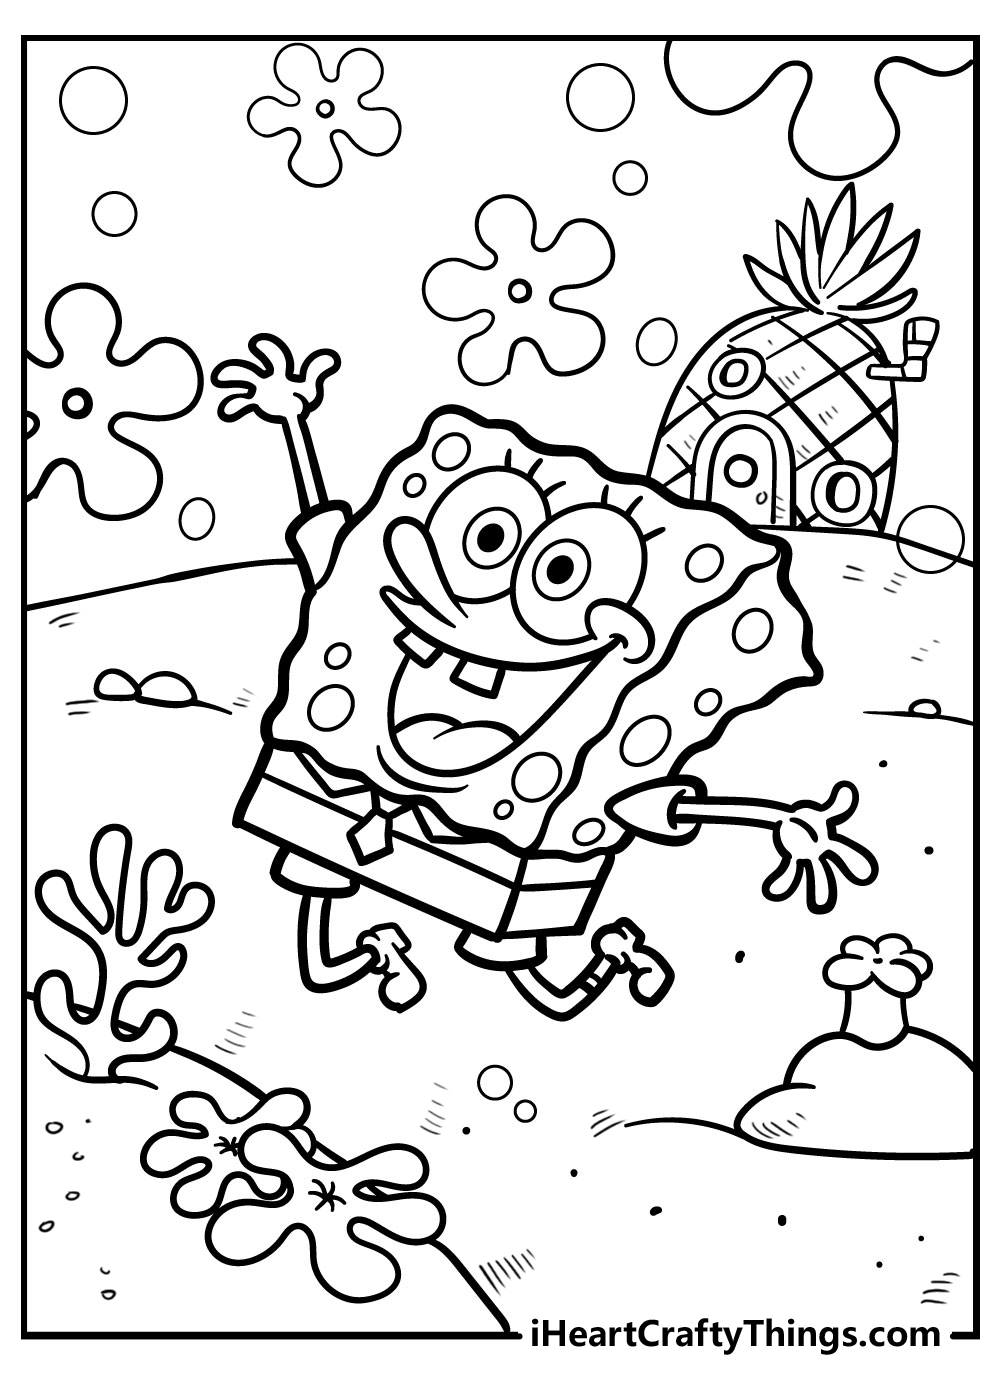 20-super-fun-spongebob-coloring-pages